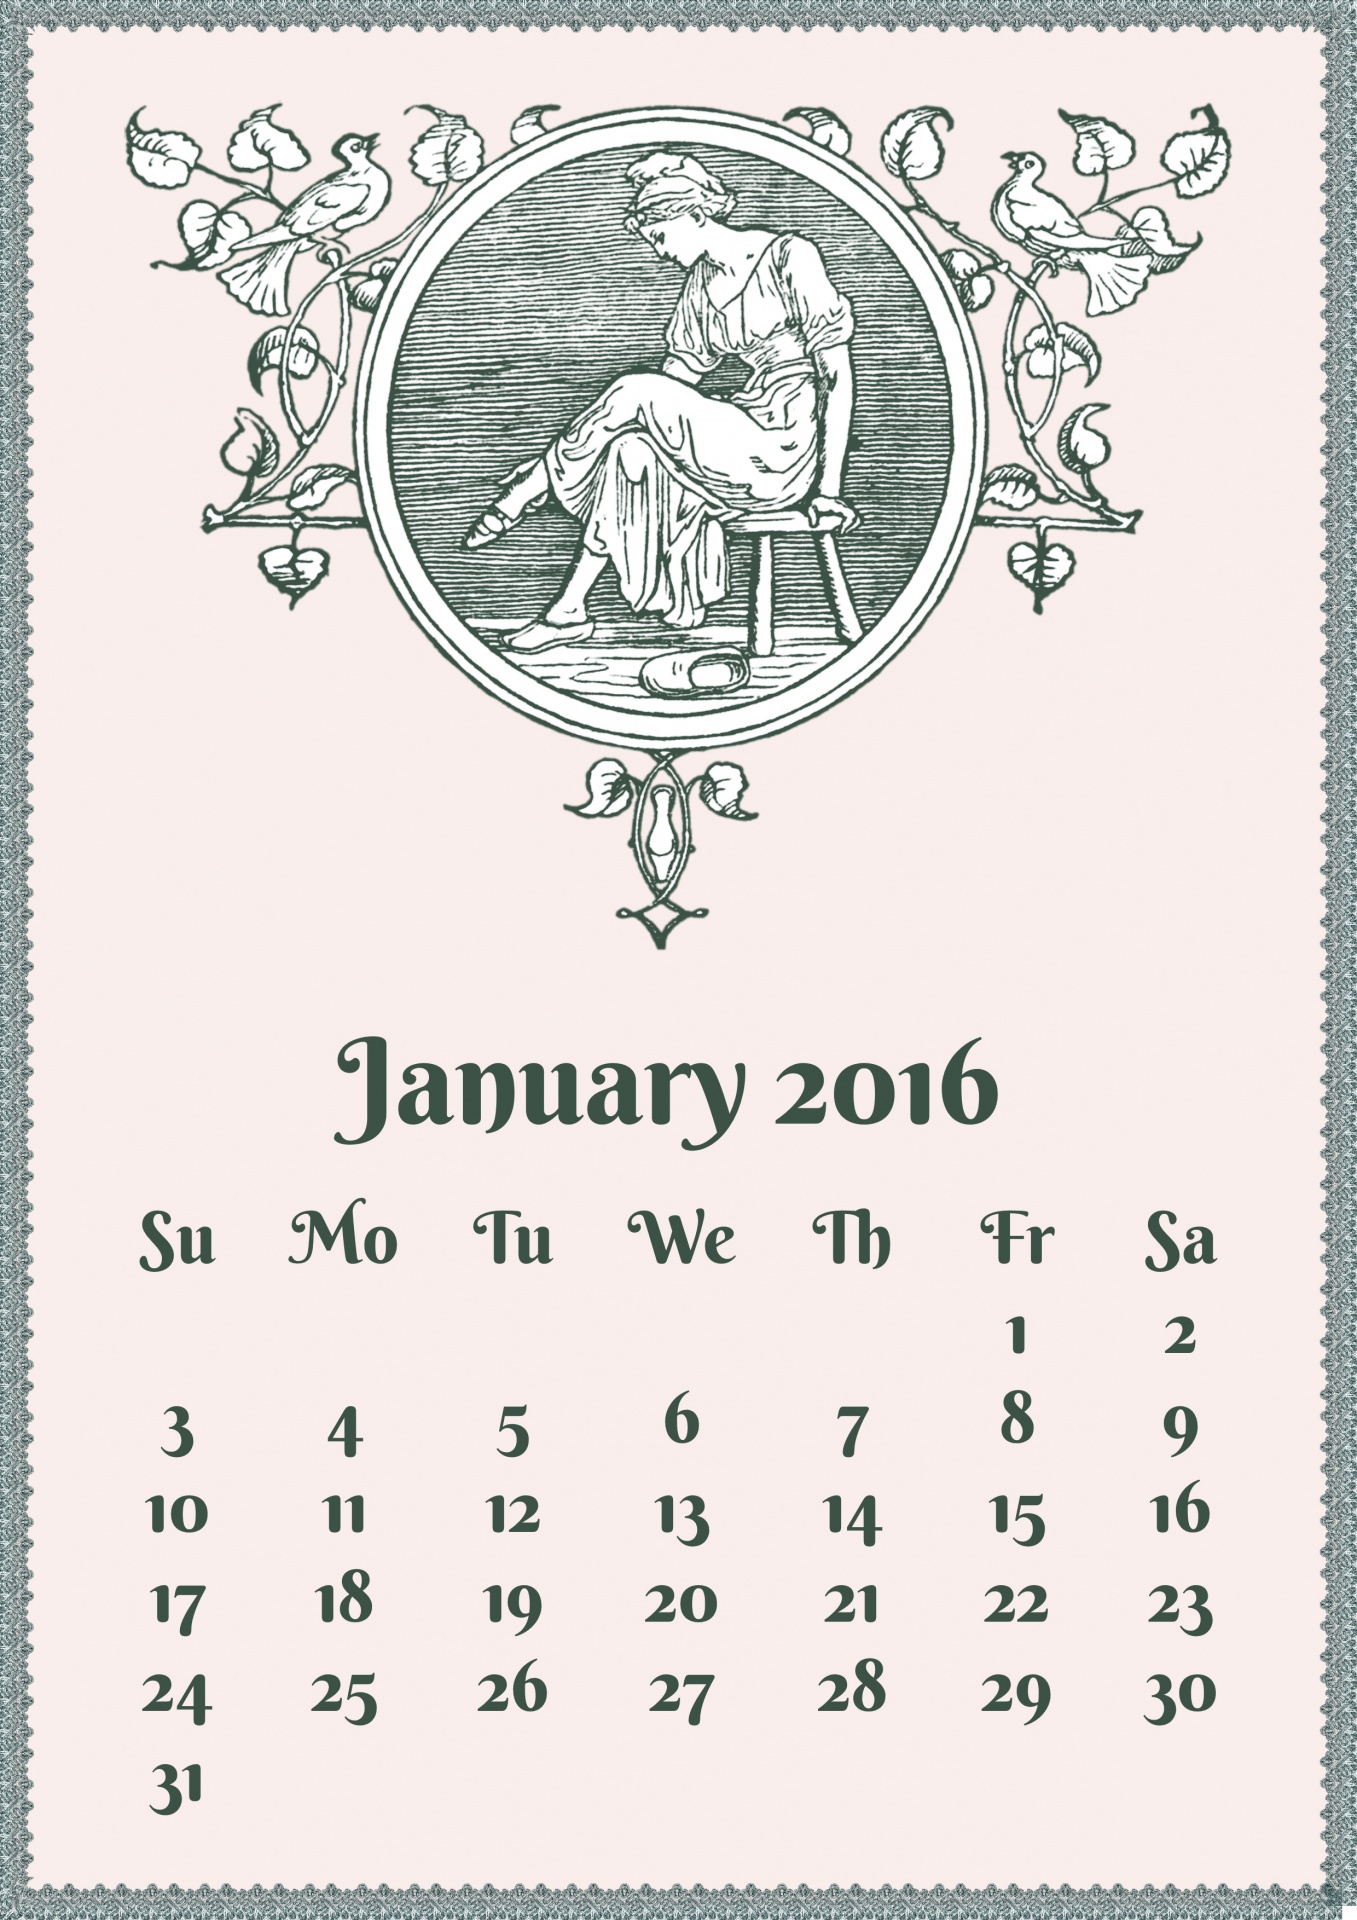 A vintage image with January 2016 calendar